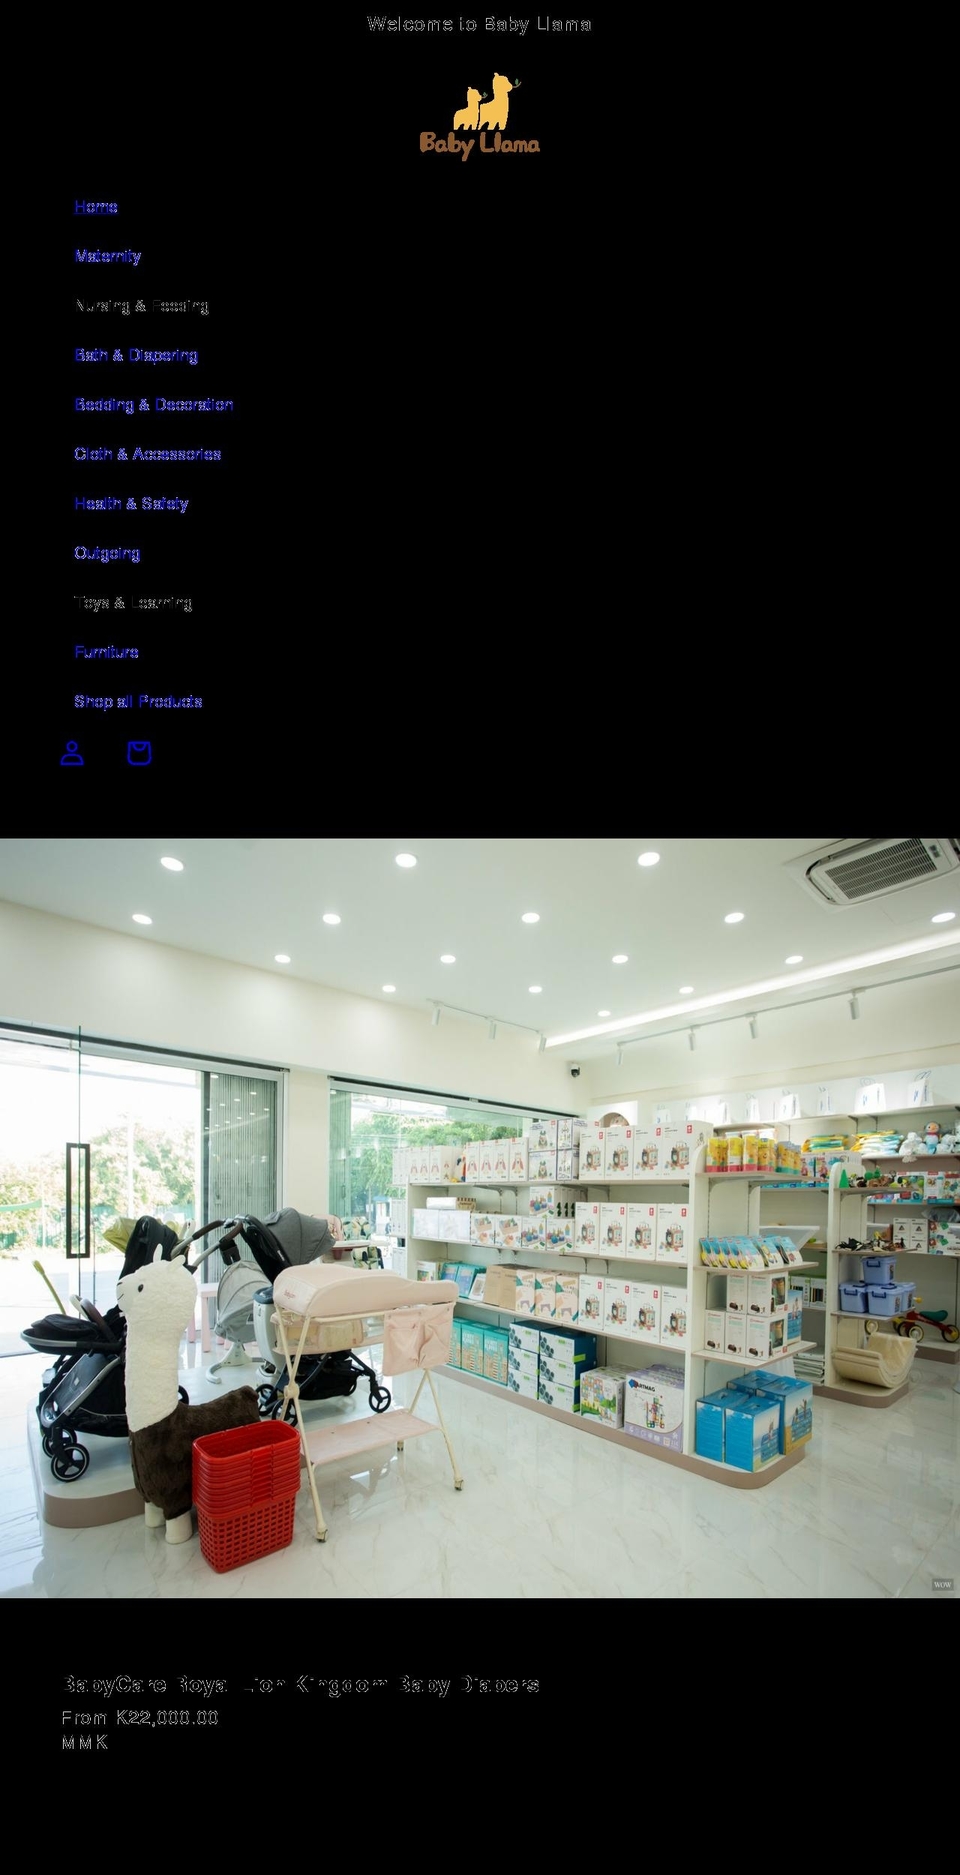 babyllama.store shopify website screenshot